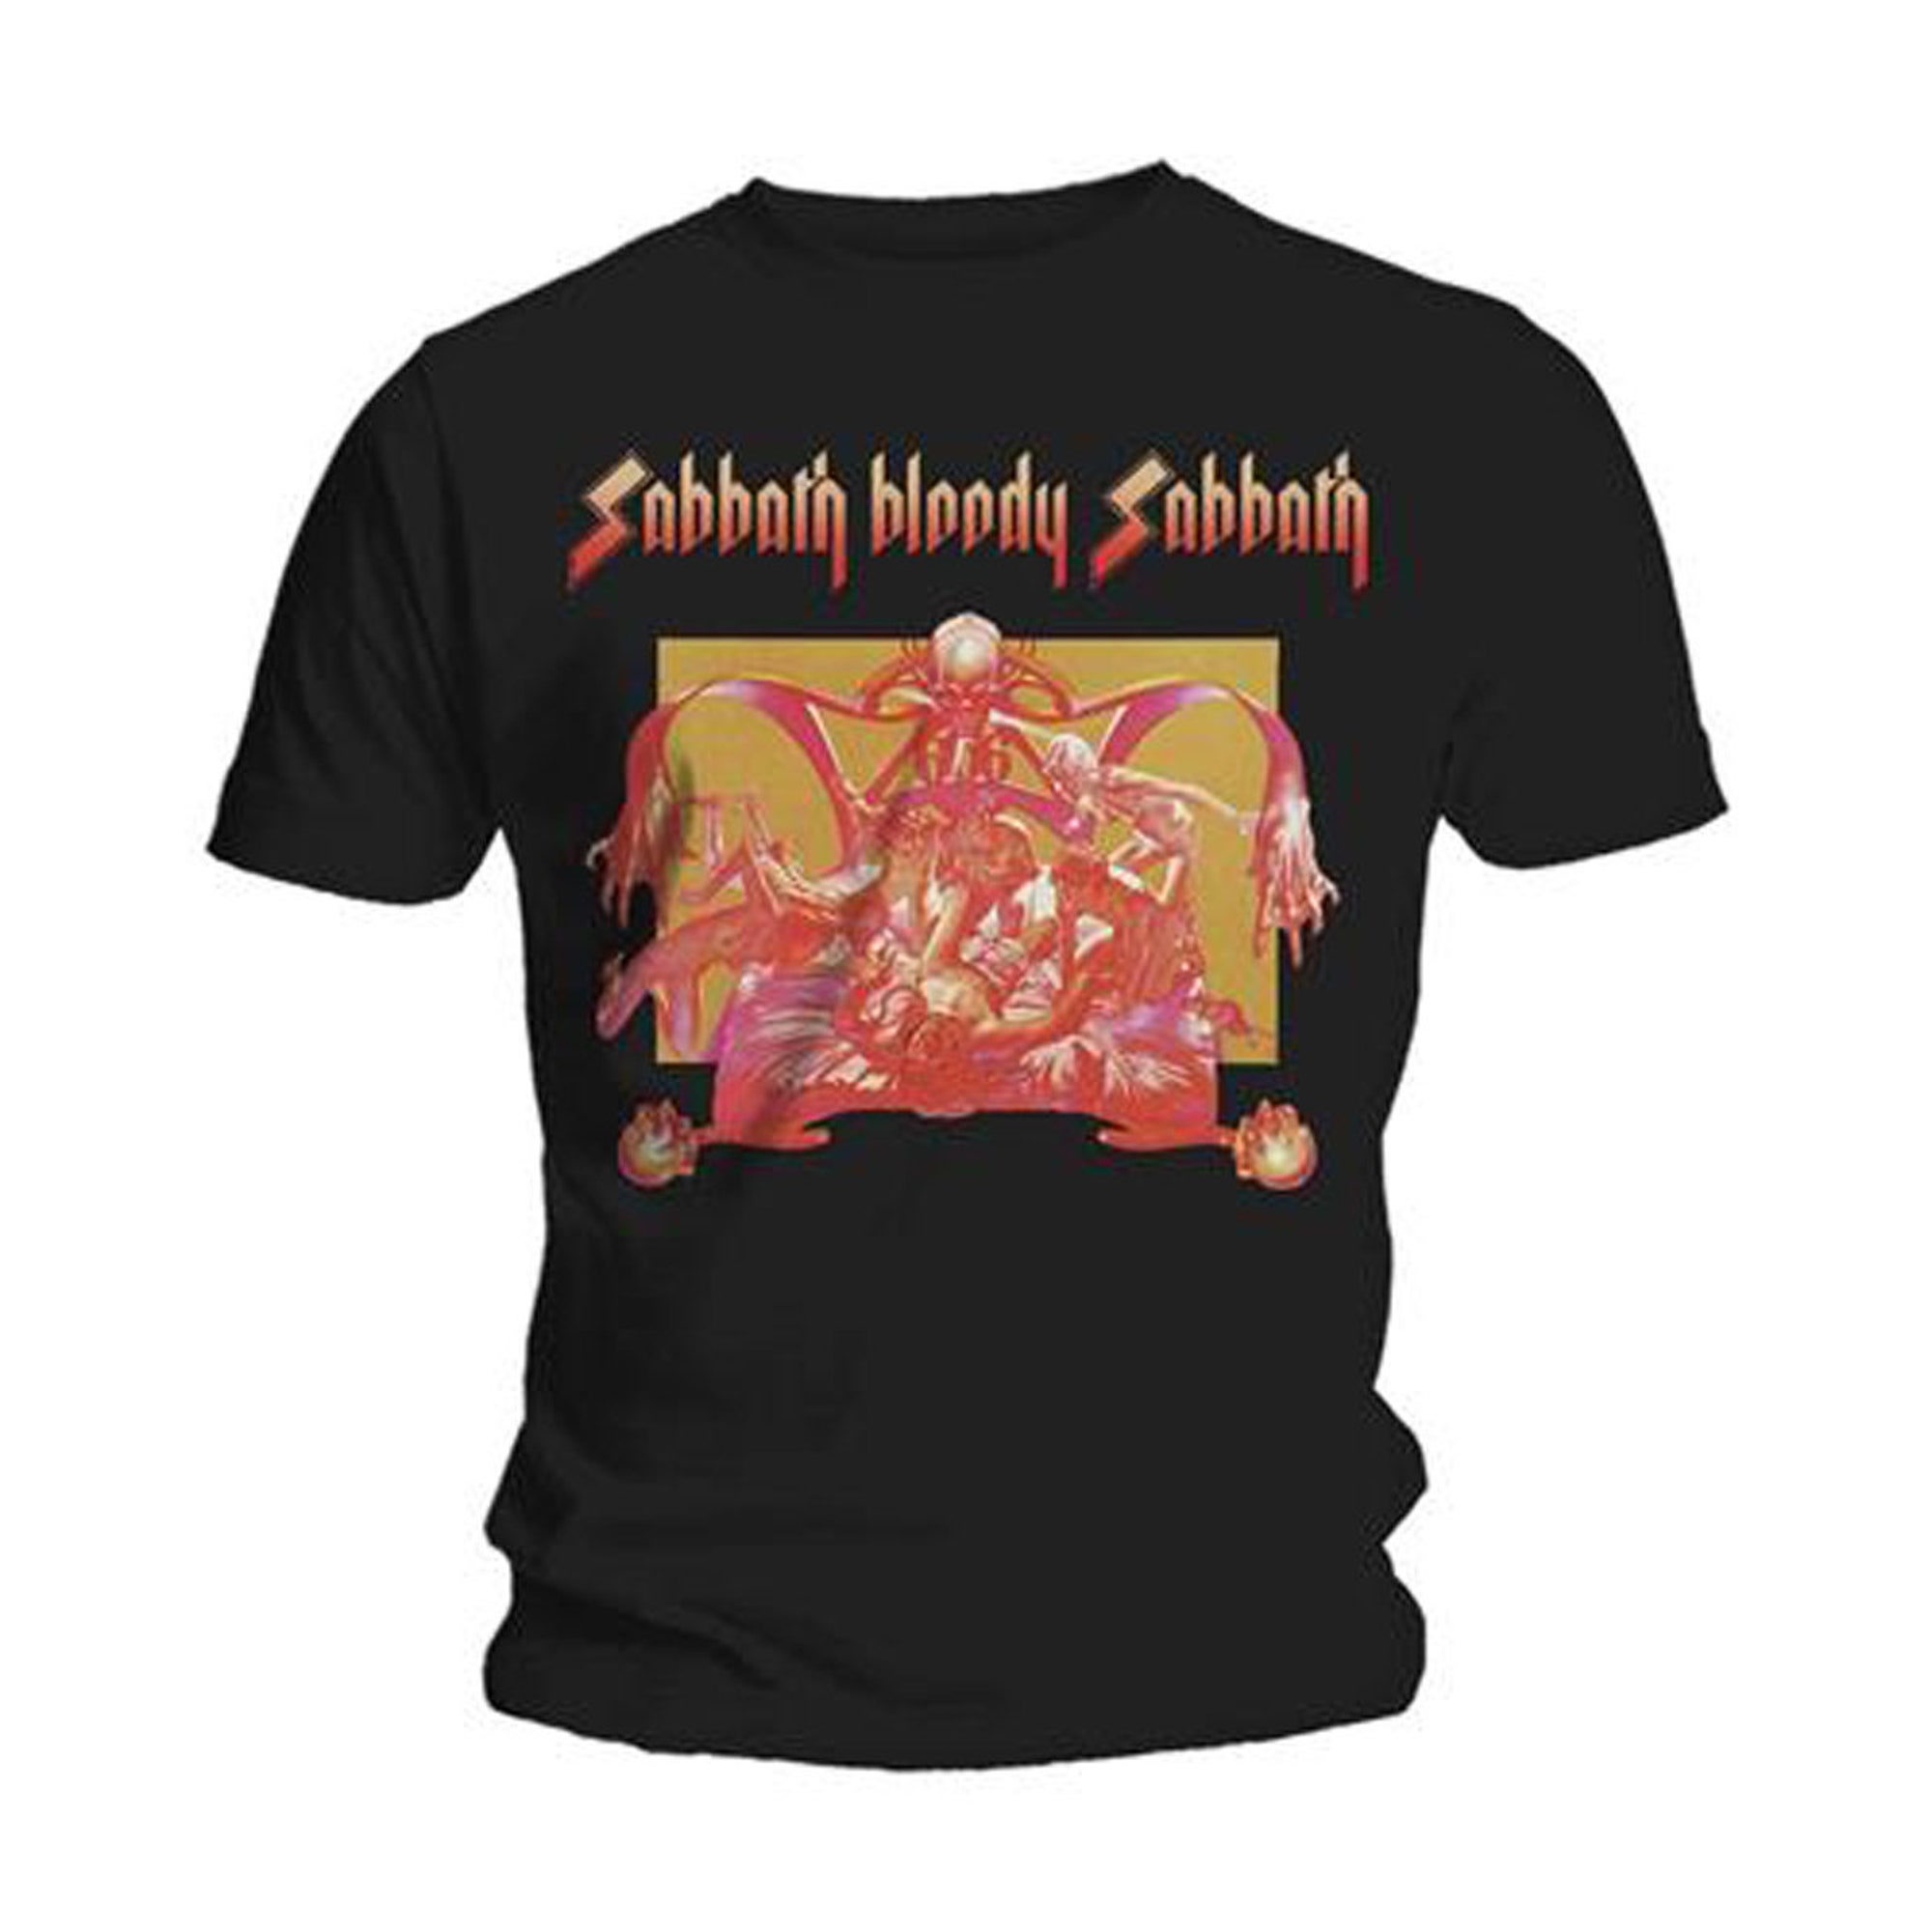 Discover Black Sabbath Bloody Sabbath 1 Ozzy Osbourne Official Tee T-Shirt Mens Unisex